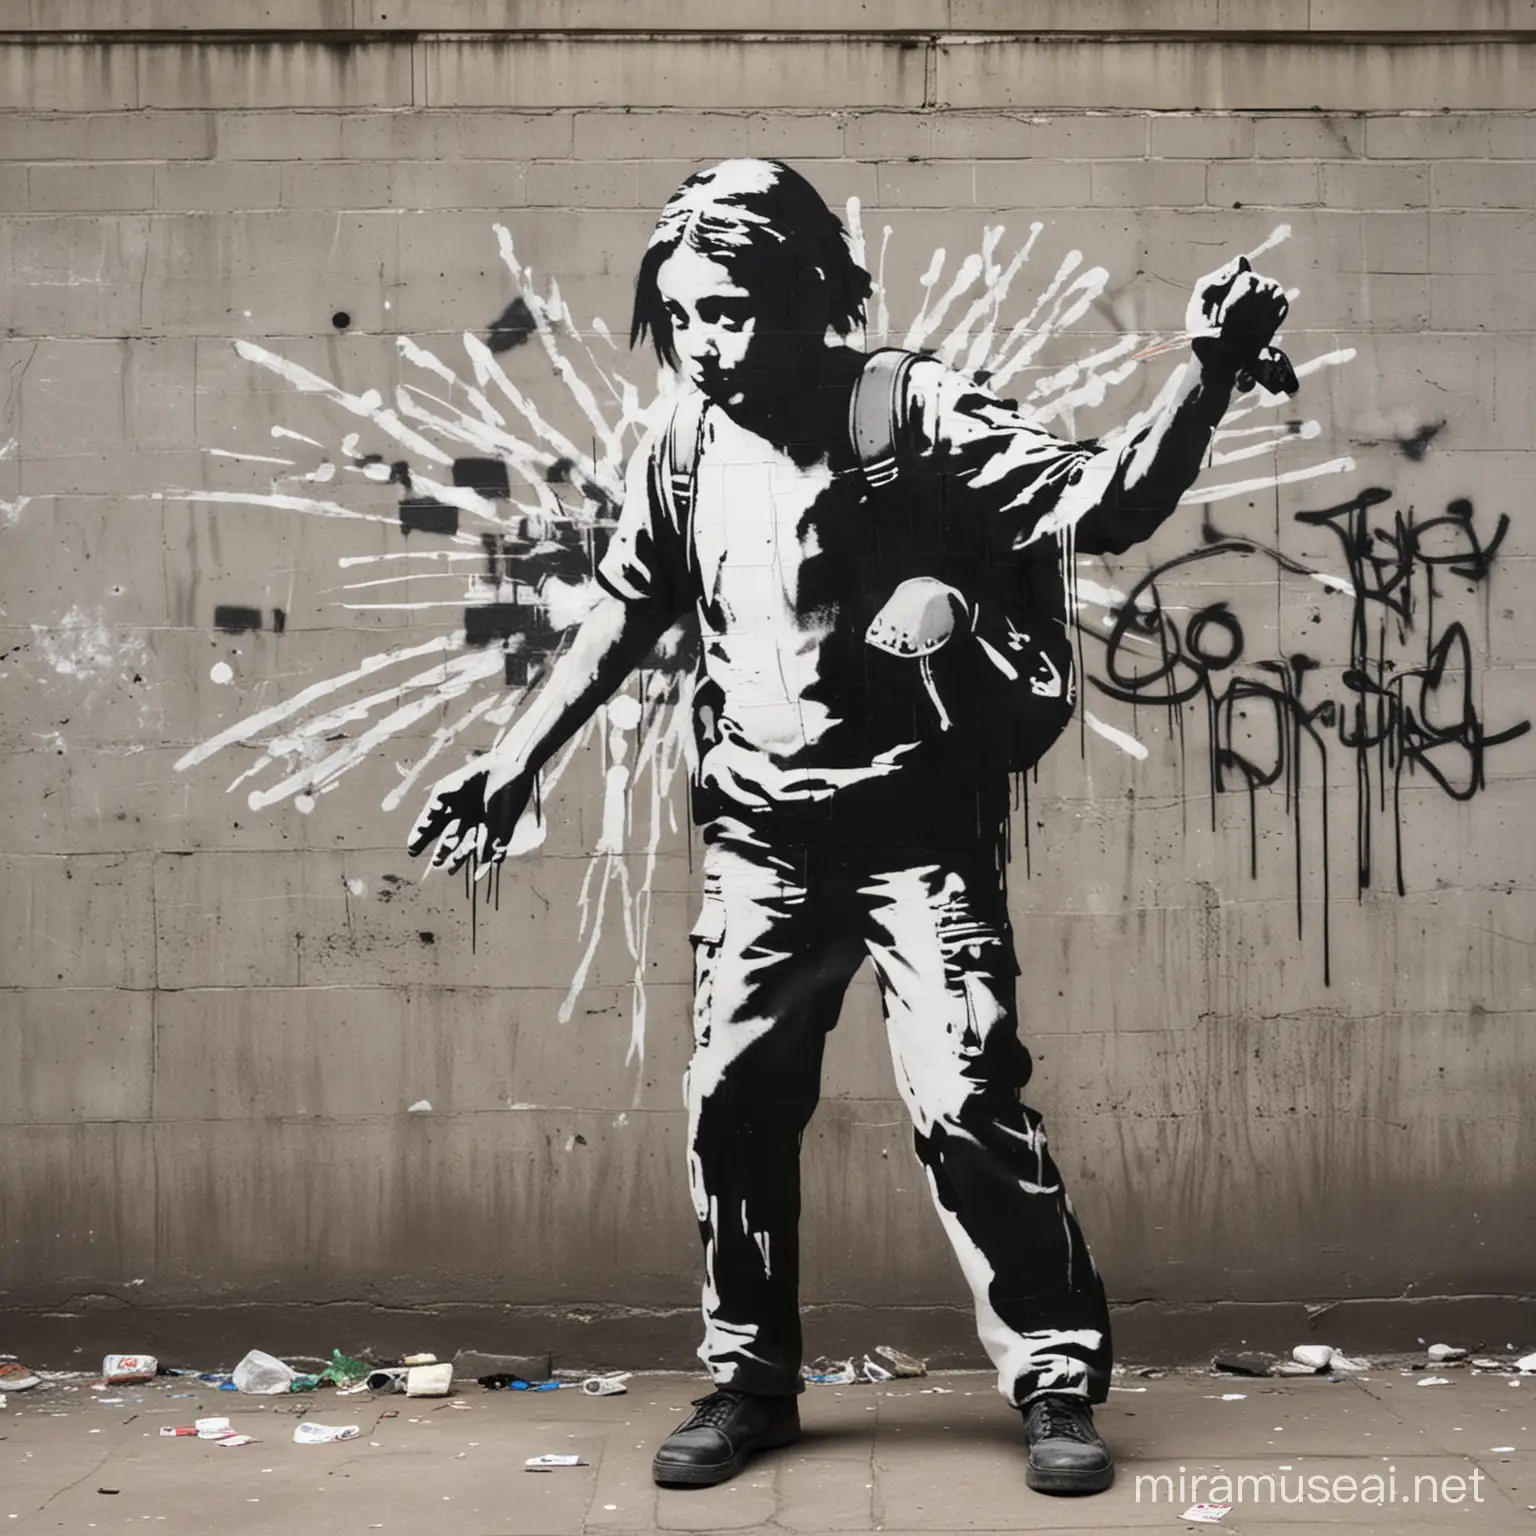 Urban Graffiti Depiction of School Shooting Awareness by Banksy Style Artist